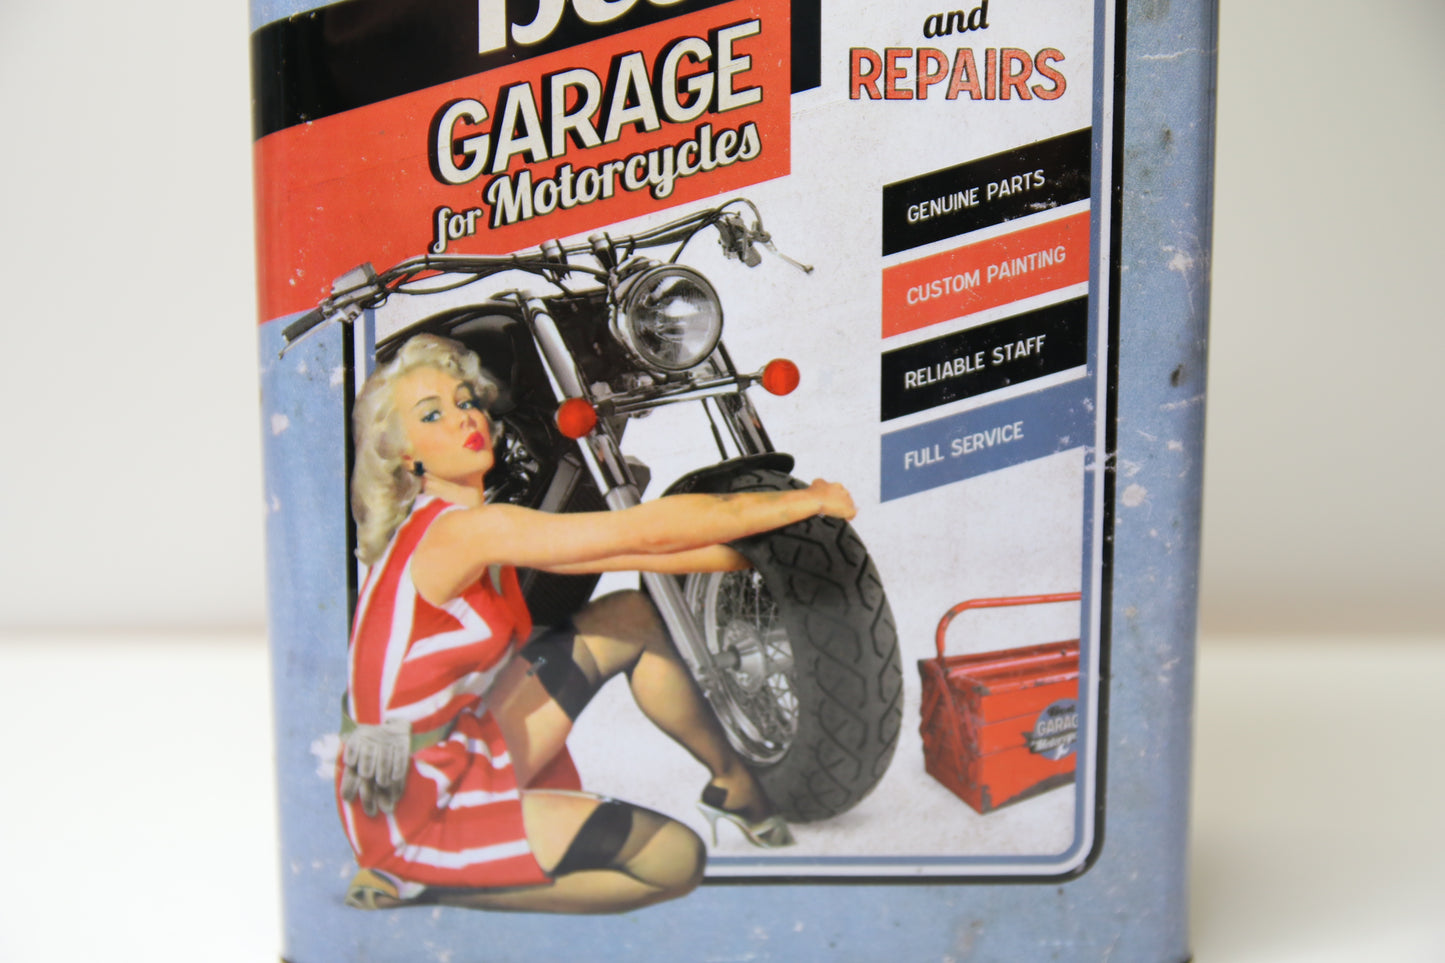 Best Garage for motorcycles peltipurkki